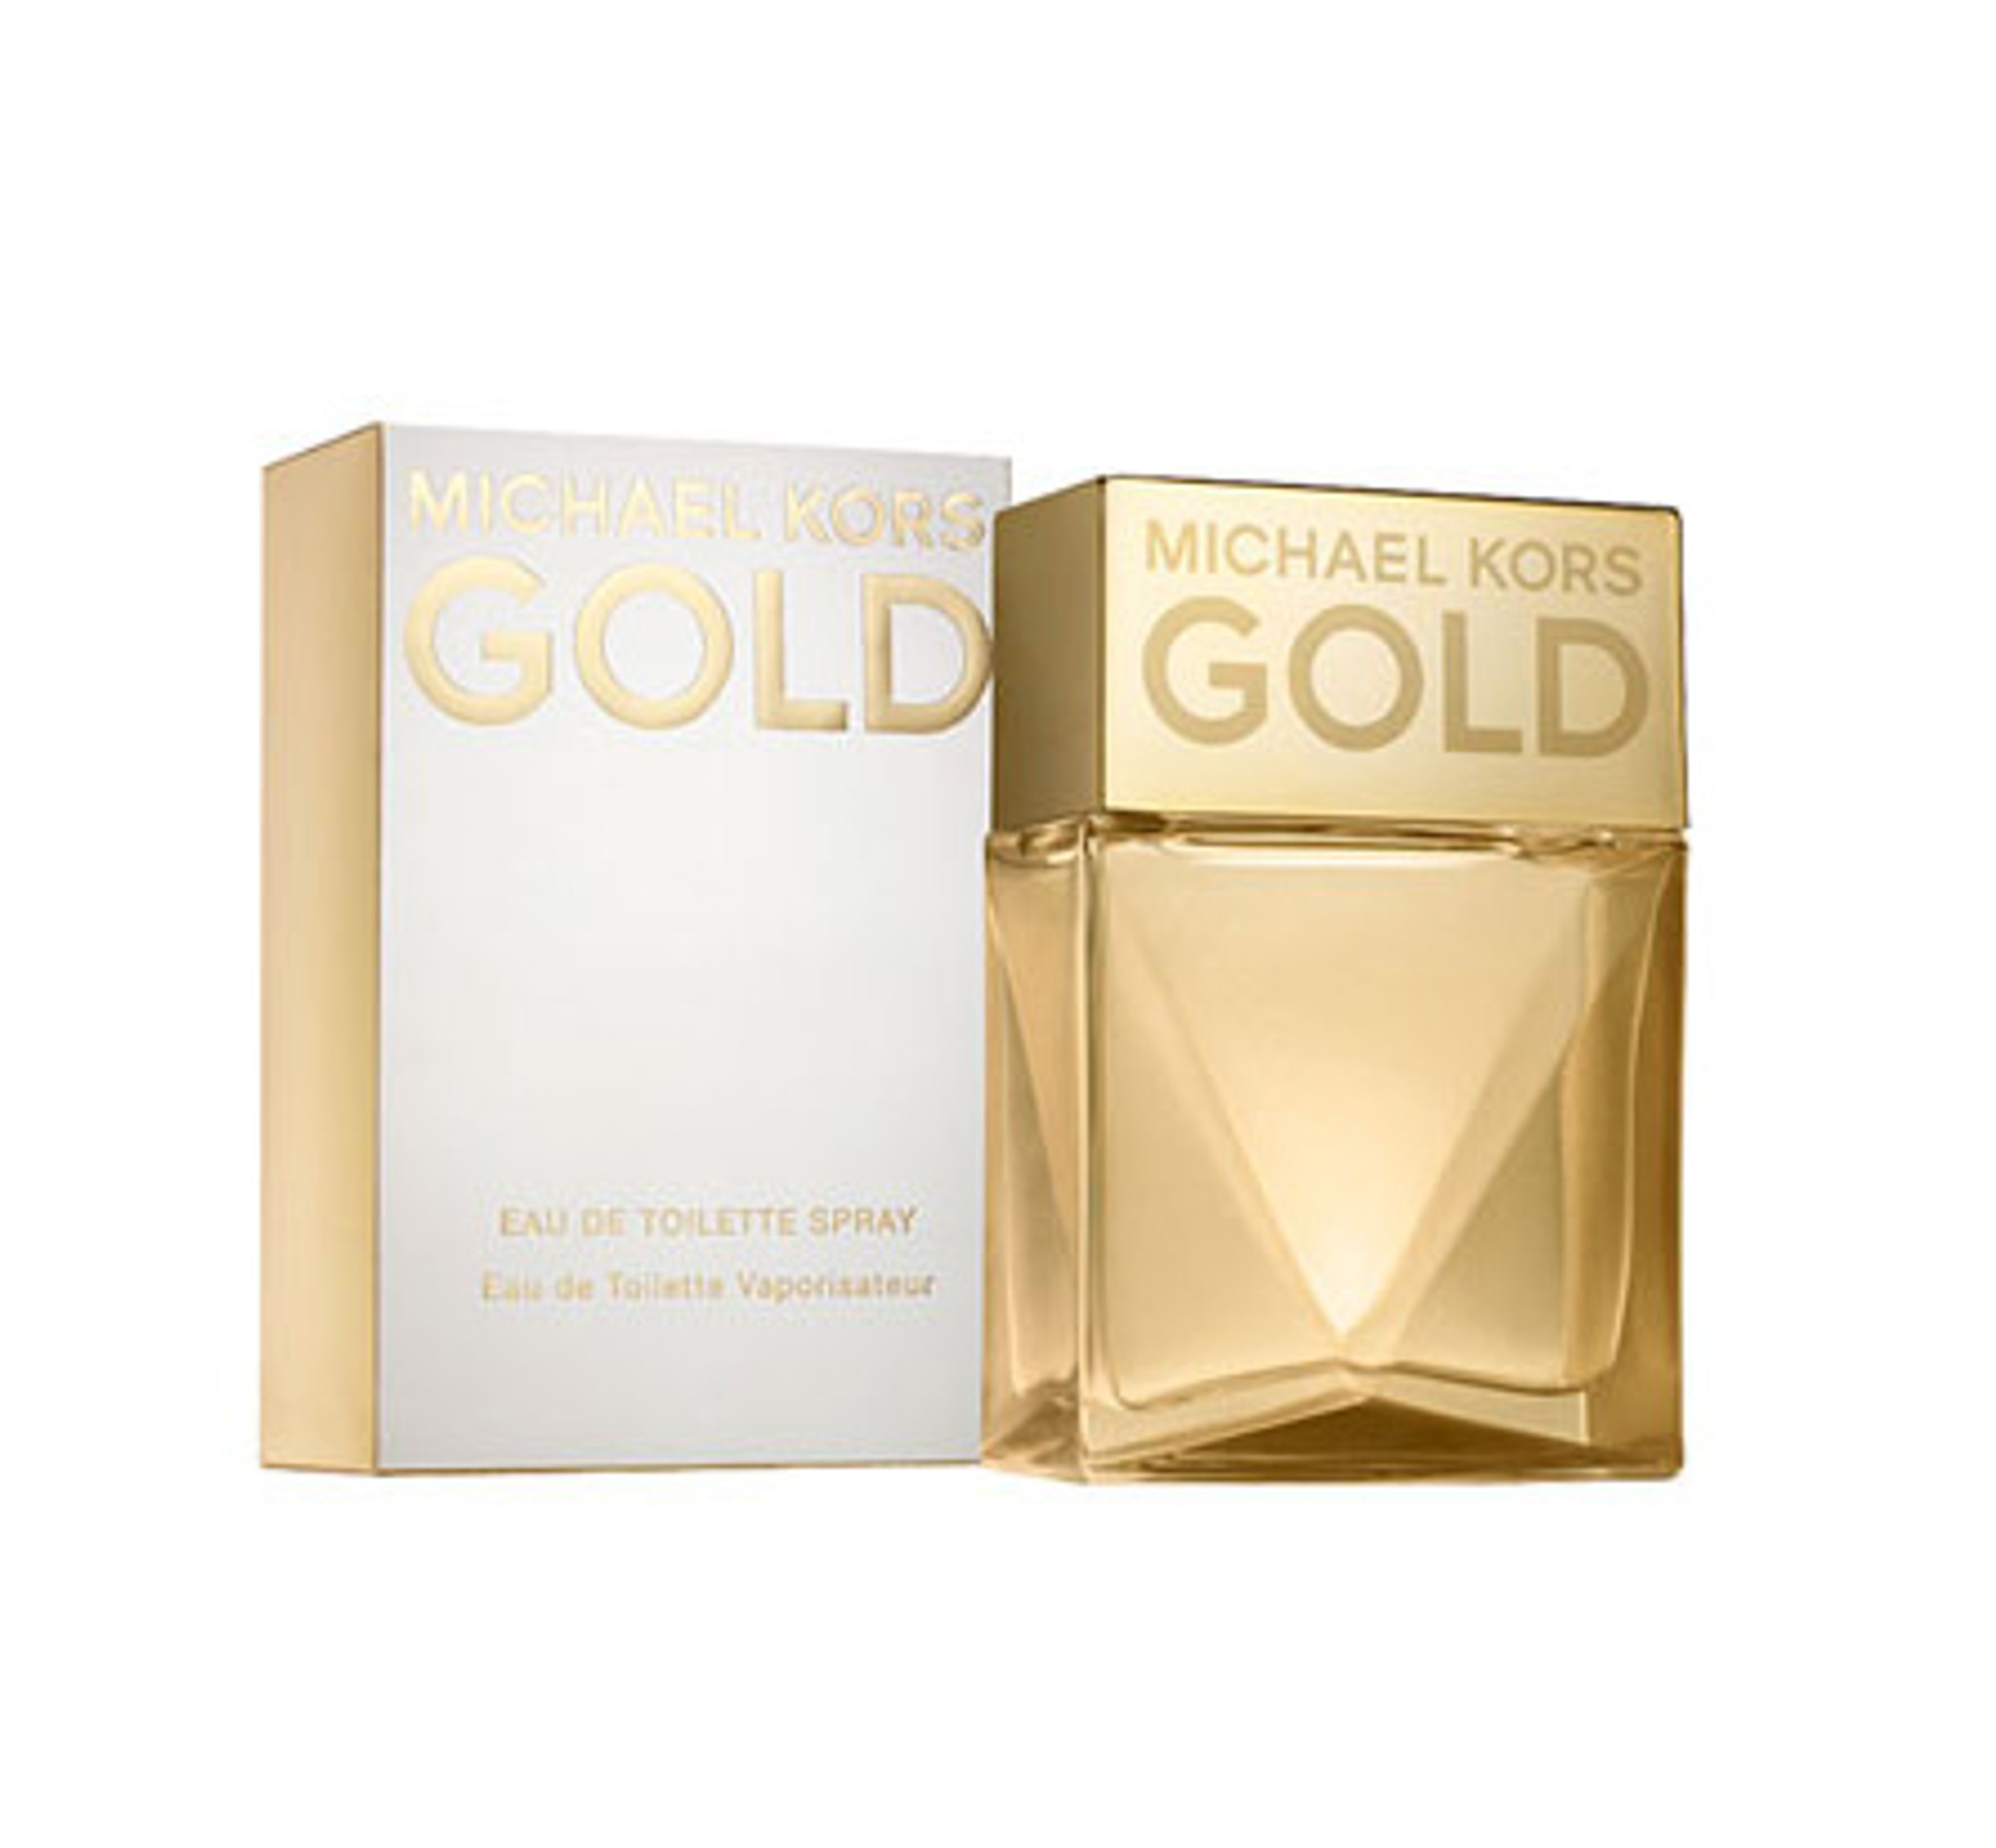 Hofte Ydeevne Gymnastik Michael Kors Gold Perfume For Women 1 oz Edp Spray - HottPerfume.com